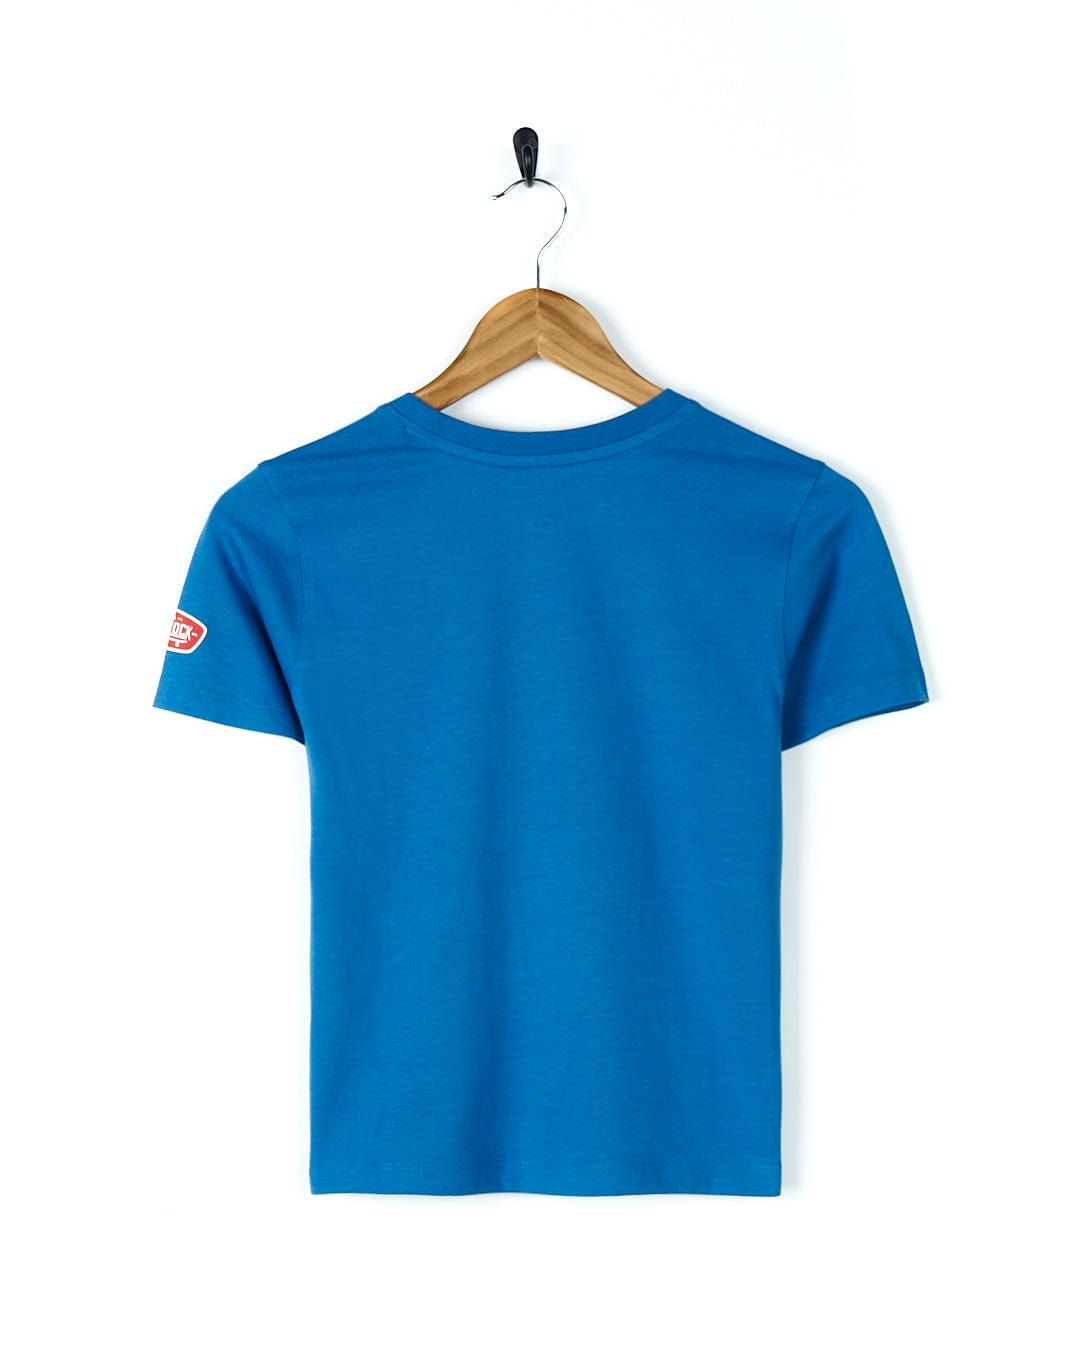 A Warp Mashup - Kids Short Sleeve T-Shirt - Blue with Saltrock branding hanging on a wooden hanger.